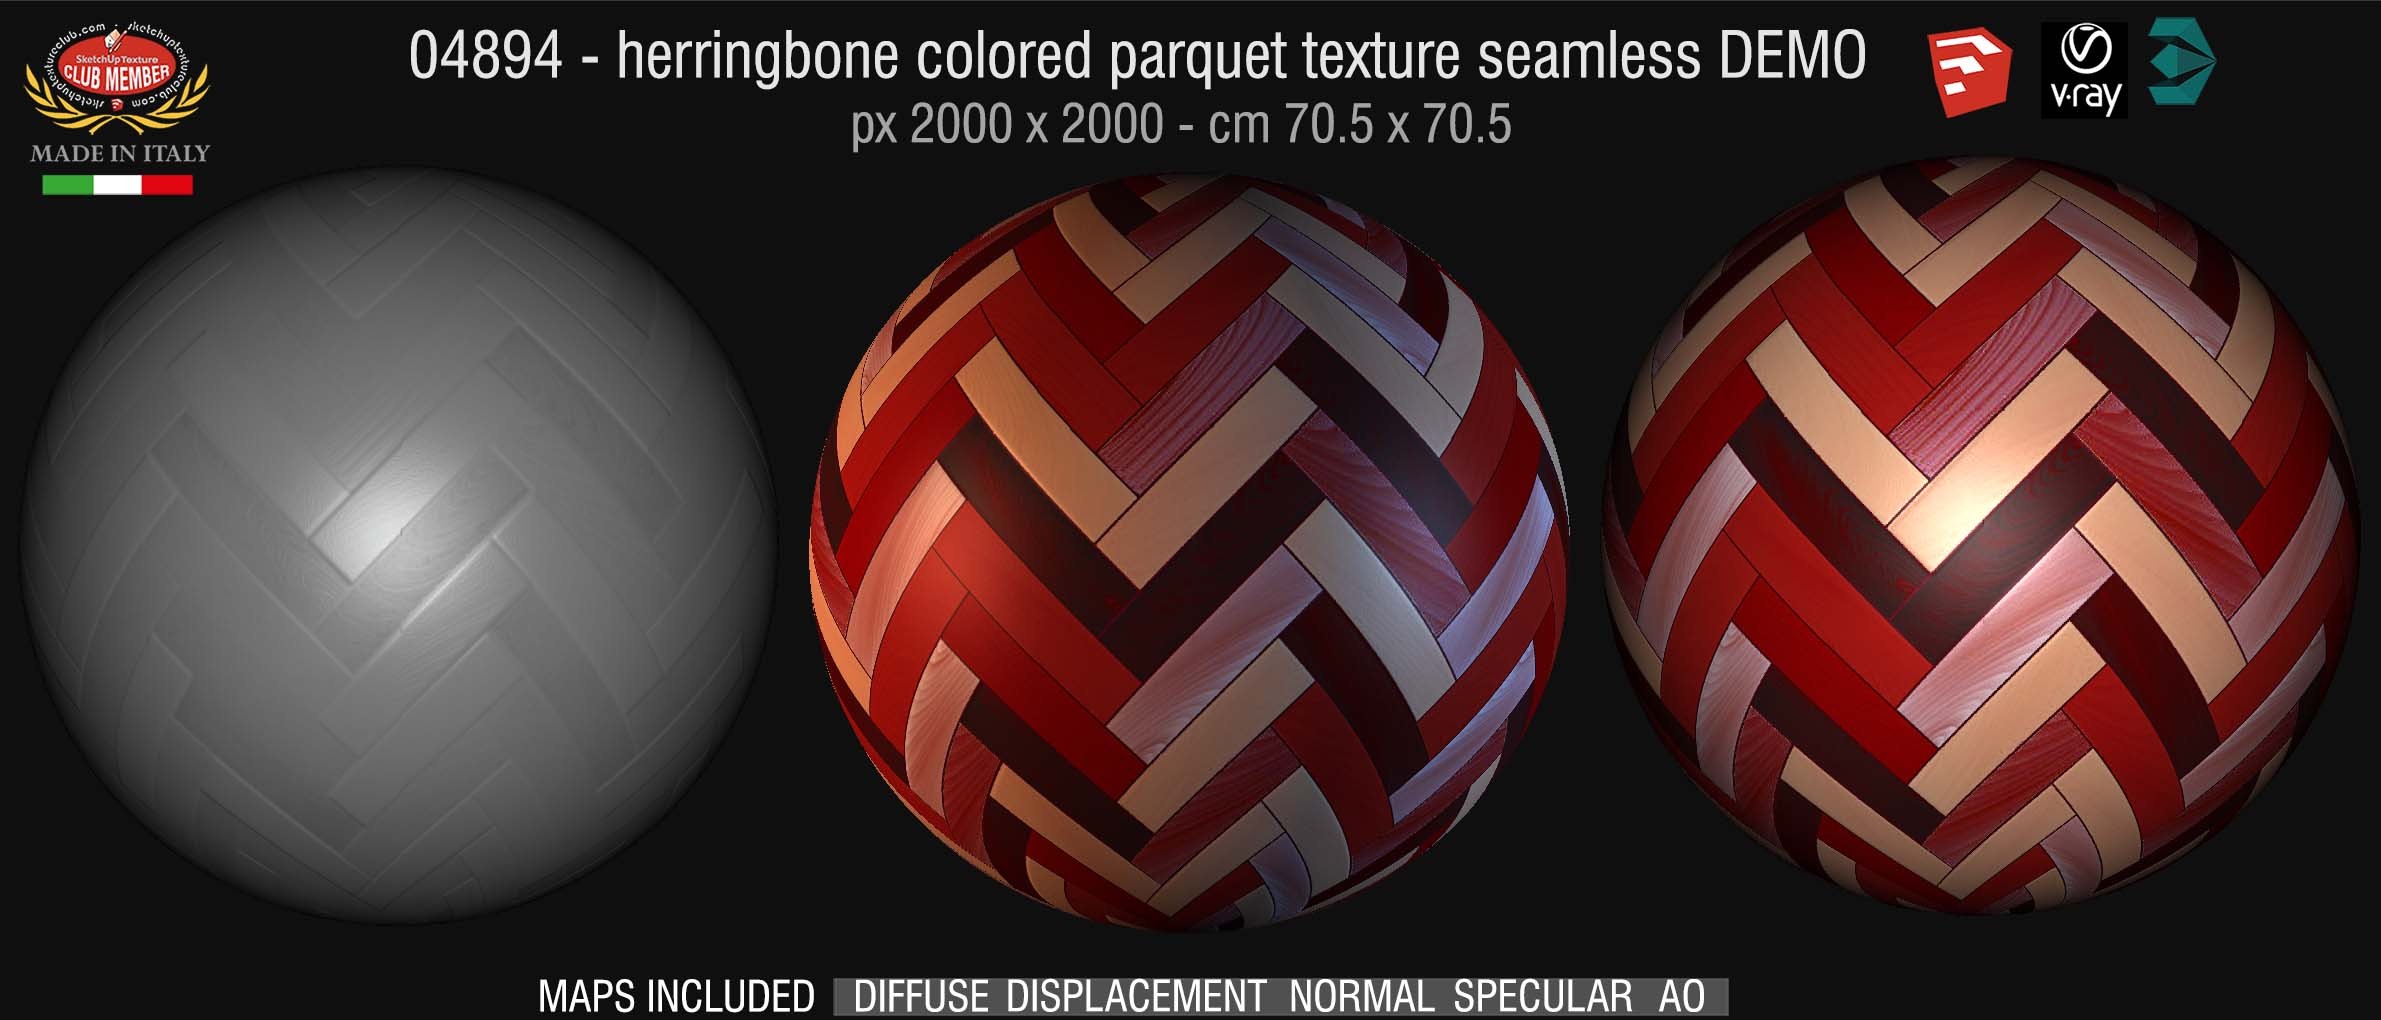 04894 HR Herringbone colored parquet texture seamless + maps DEMO